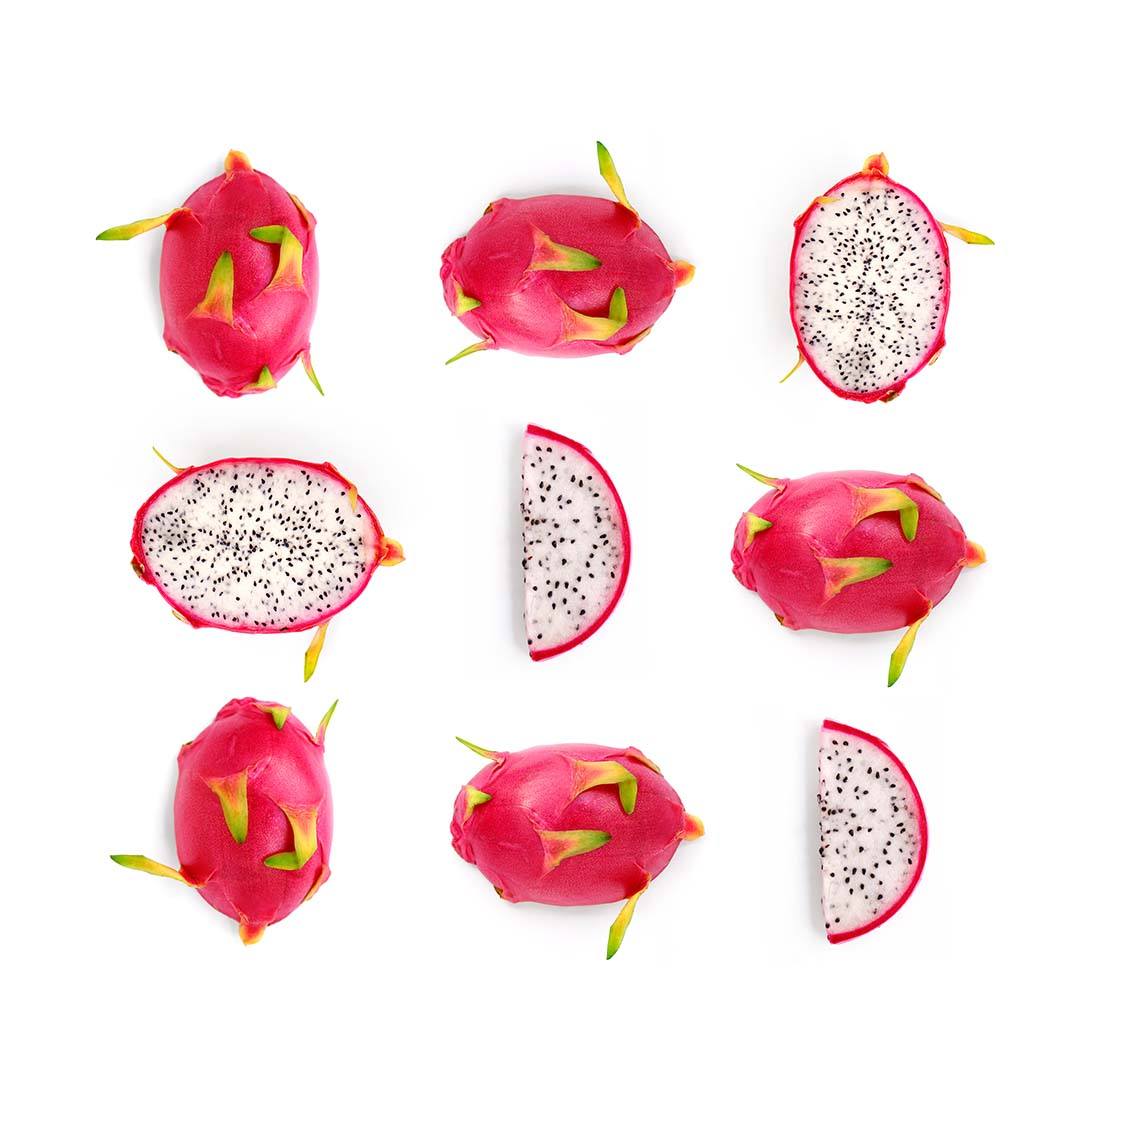 Dragon Fruit / Pitaya - White | Exotic Fruits - Rare & Tropical Exotic Fruit Shop UK